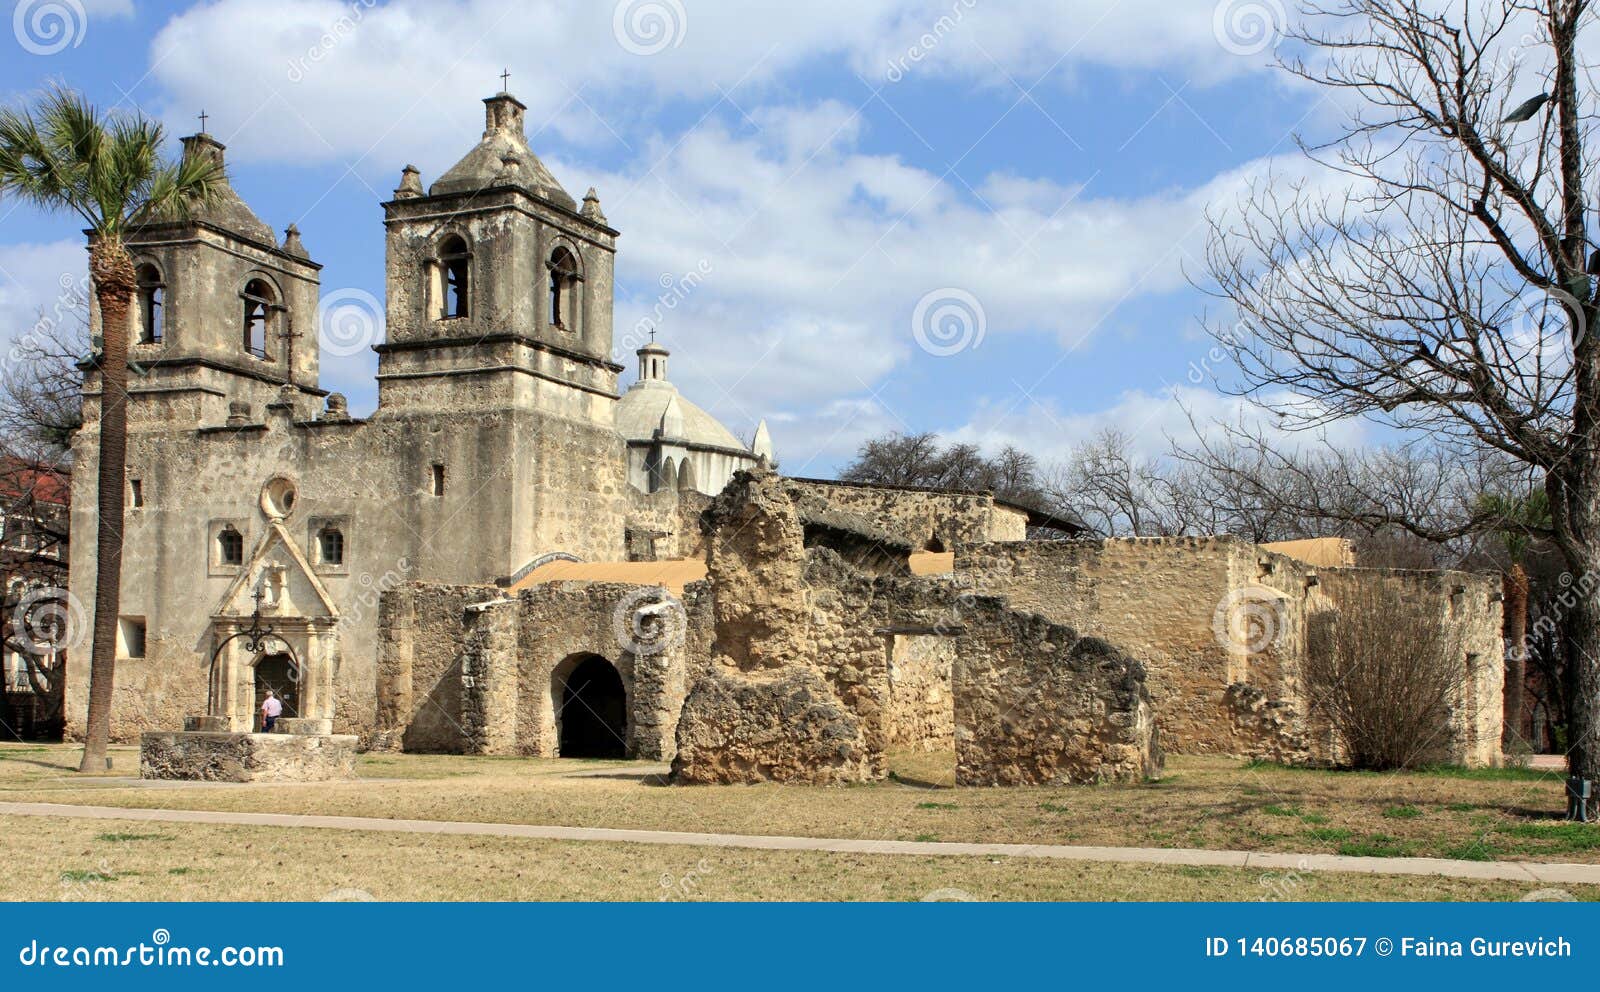 San Antonio Missions National Historical Park Location